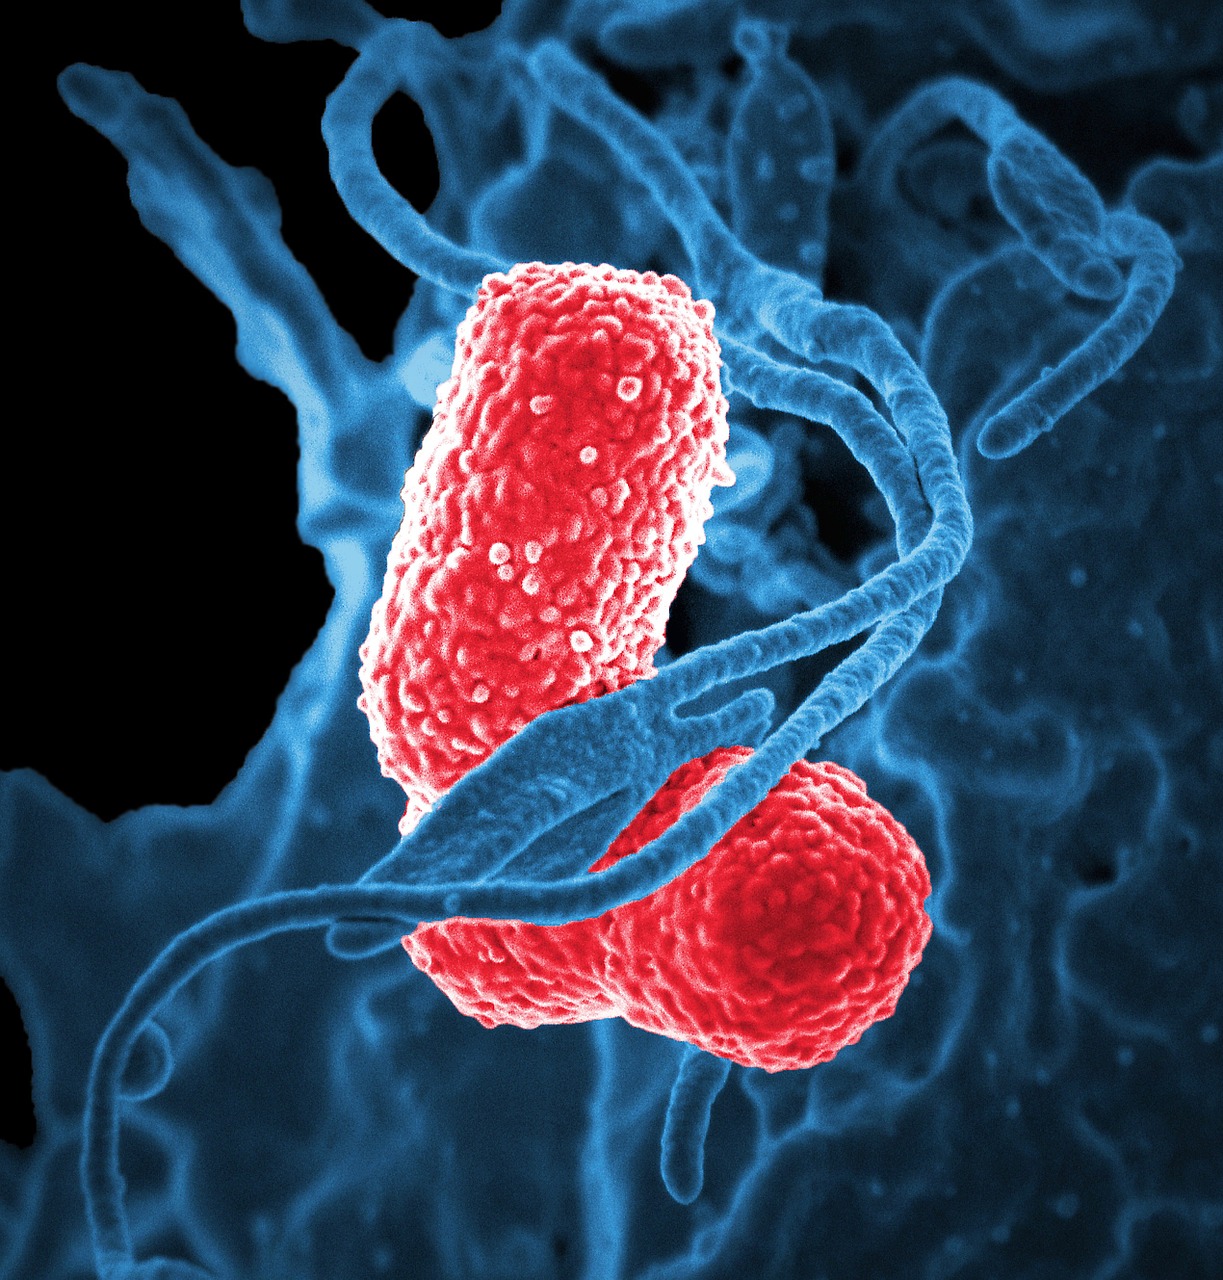 boala Whipple-imagine cu bacterii